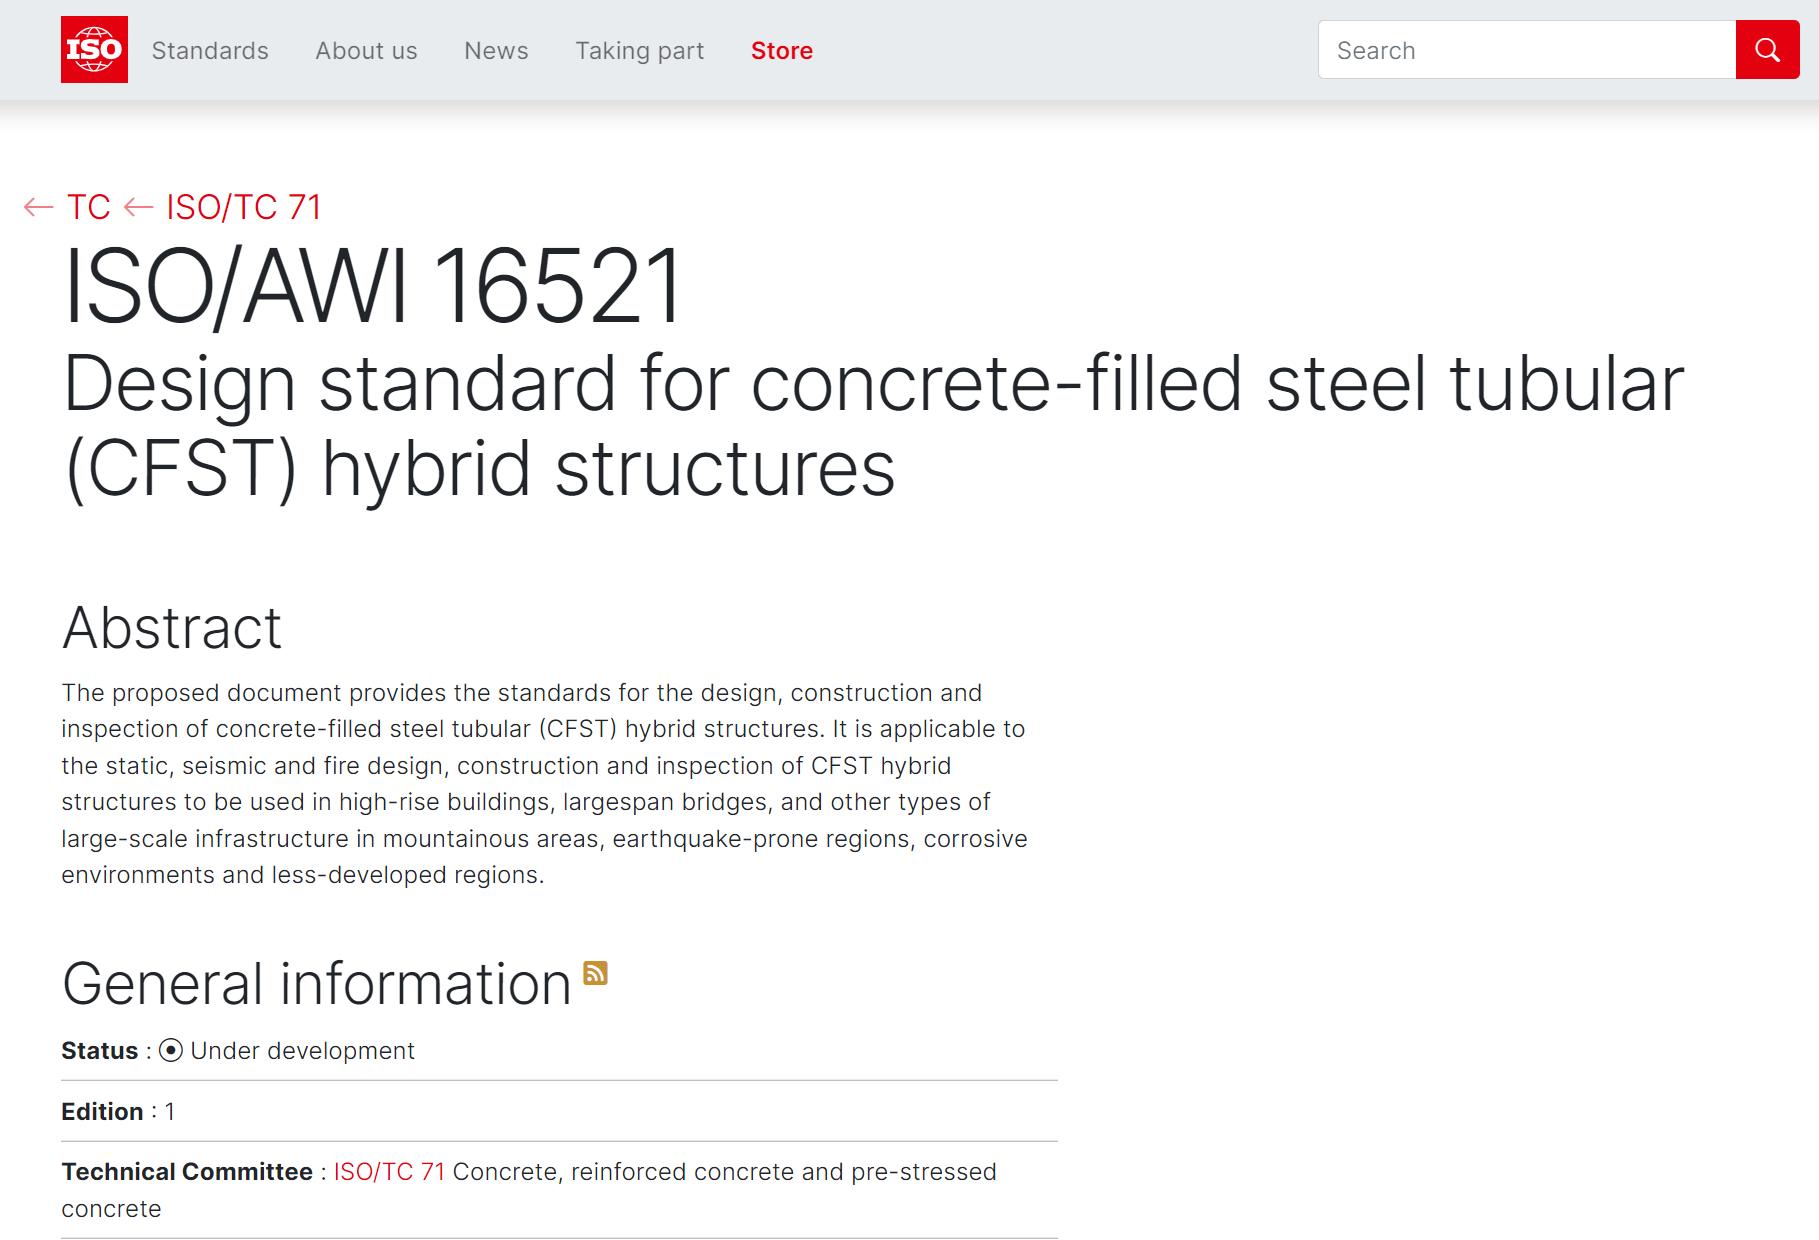 【研究进展】韩林海教授主持制订的ISO标准《Design standard for concrete-filled steel tubular (CFST) hybrid structures》被批准进入Working Draft阶段